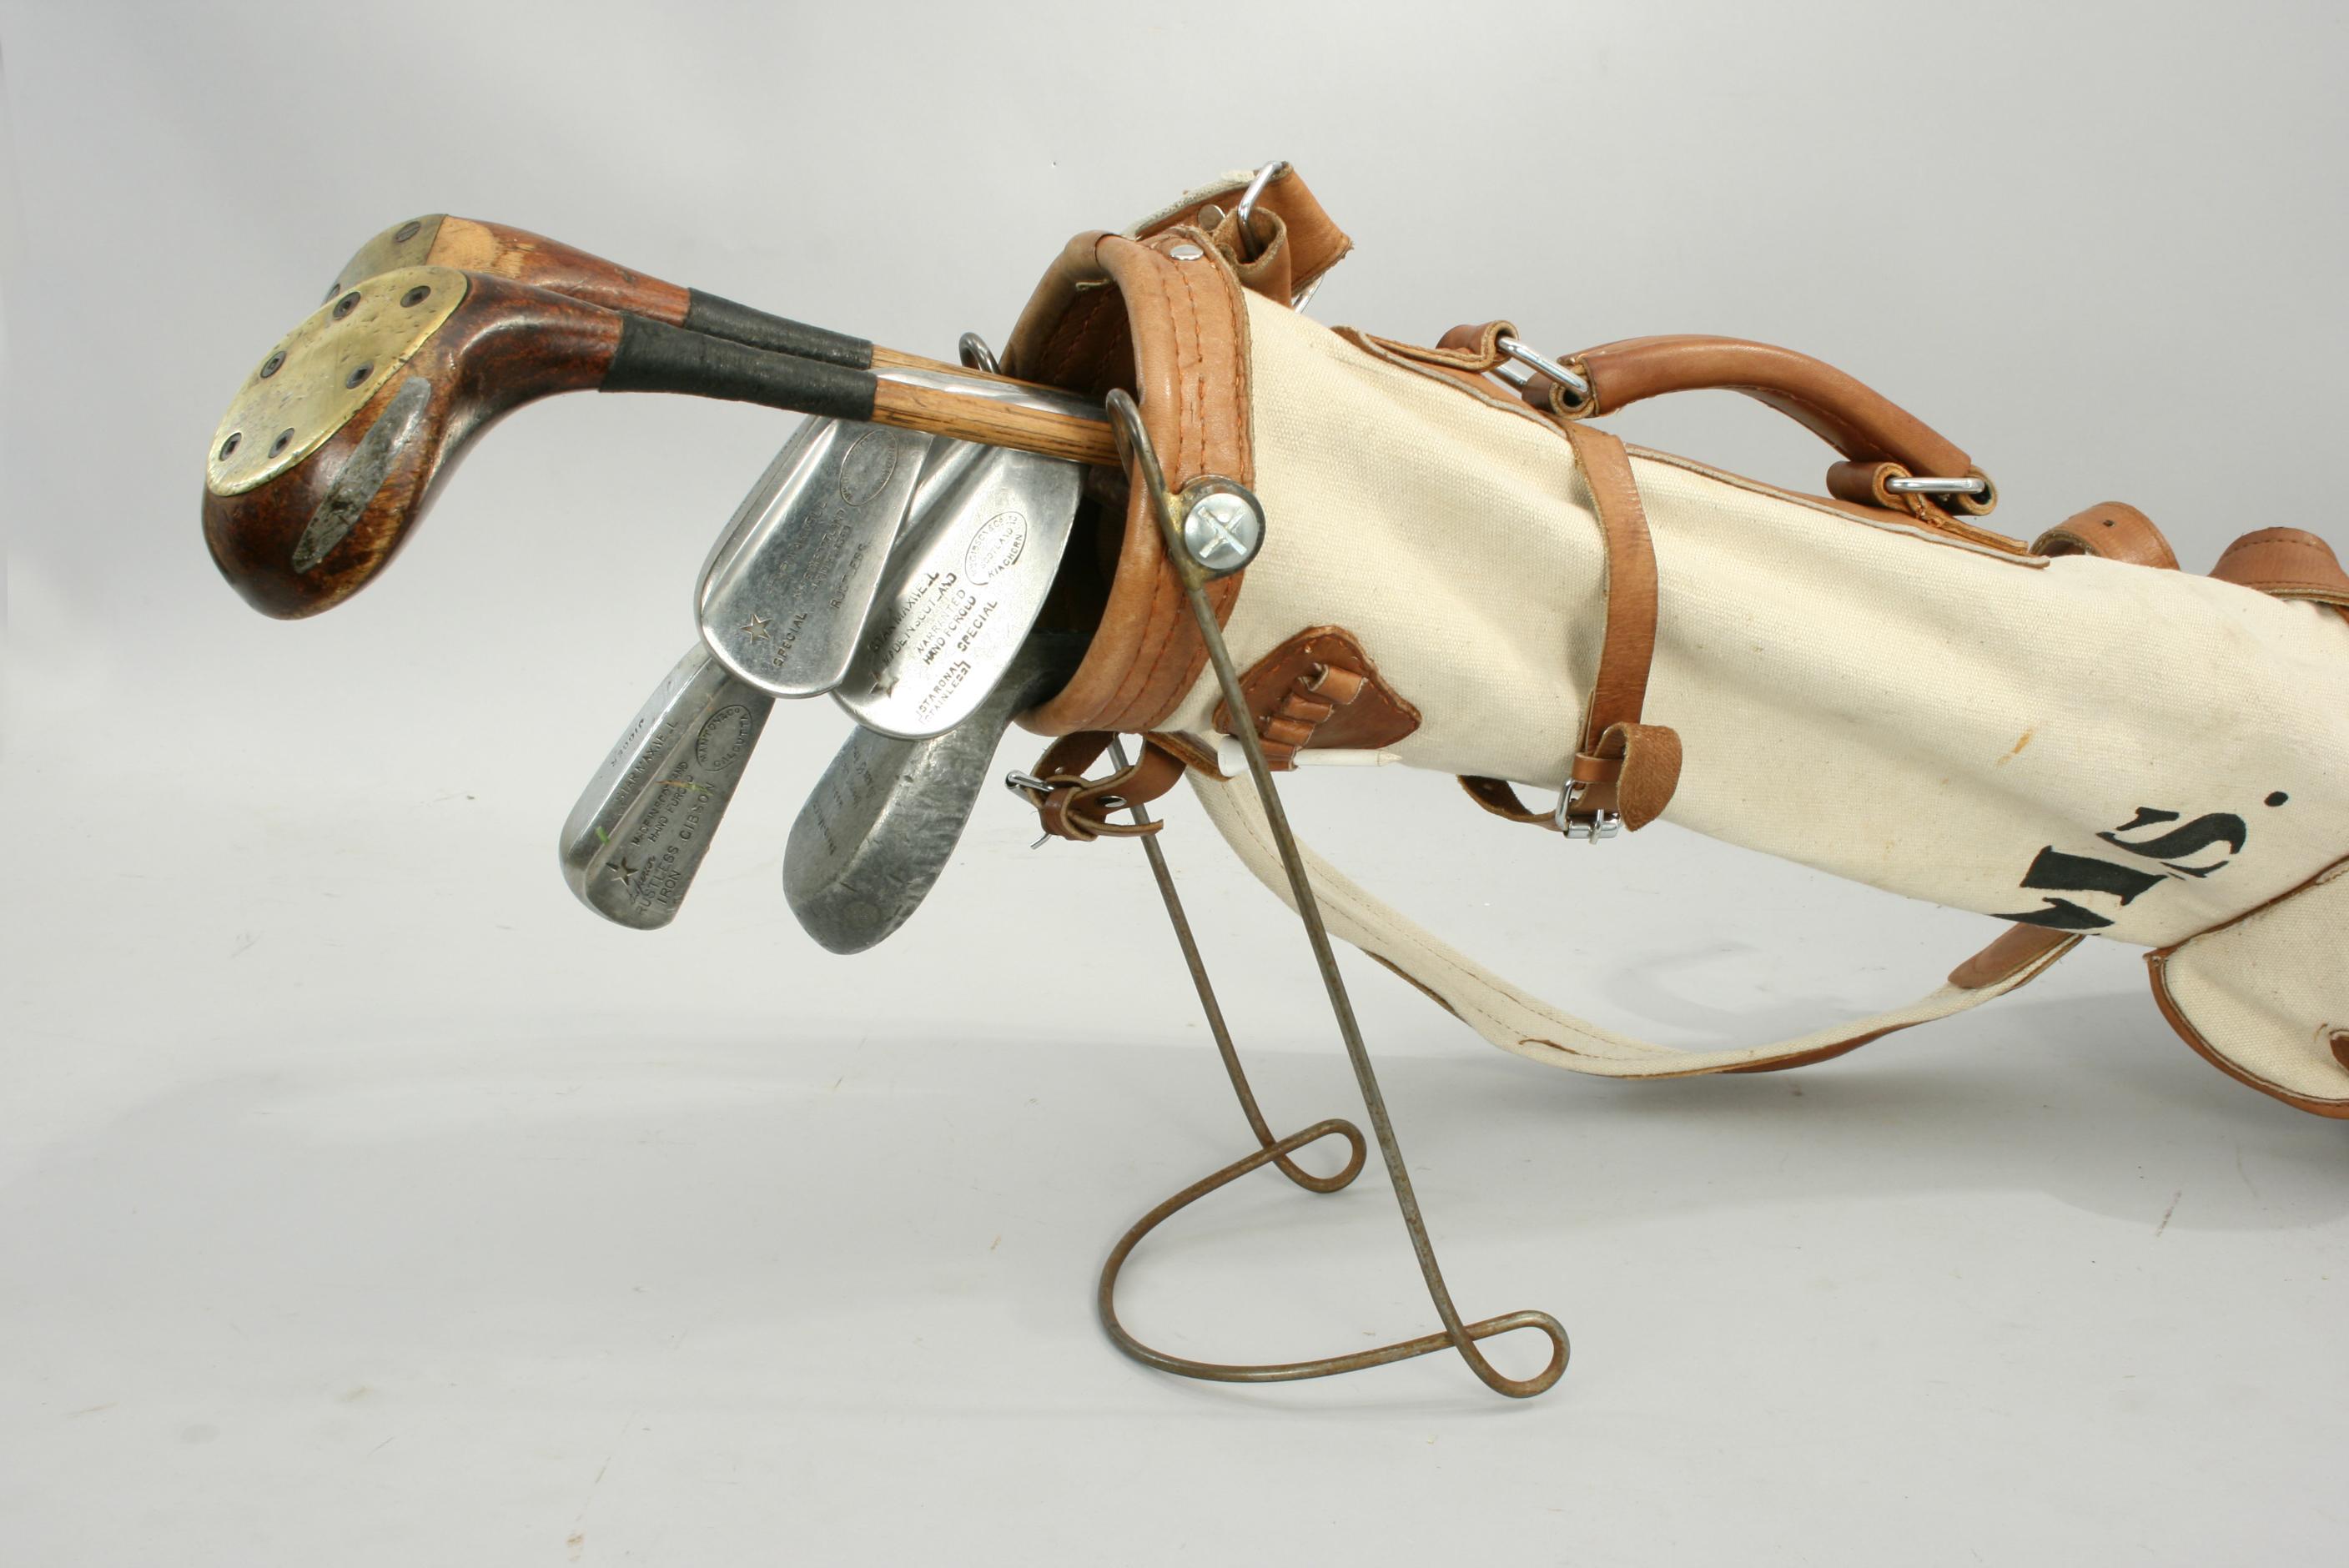 Schotten Canvas Golf Bag in a Vintage 1930s Style 1